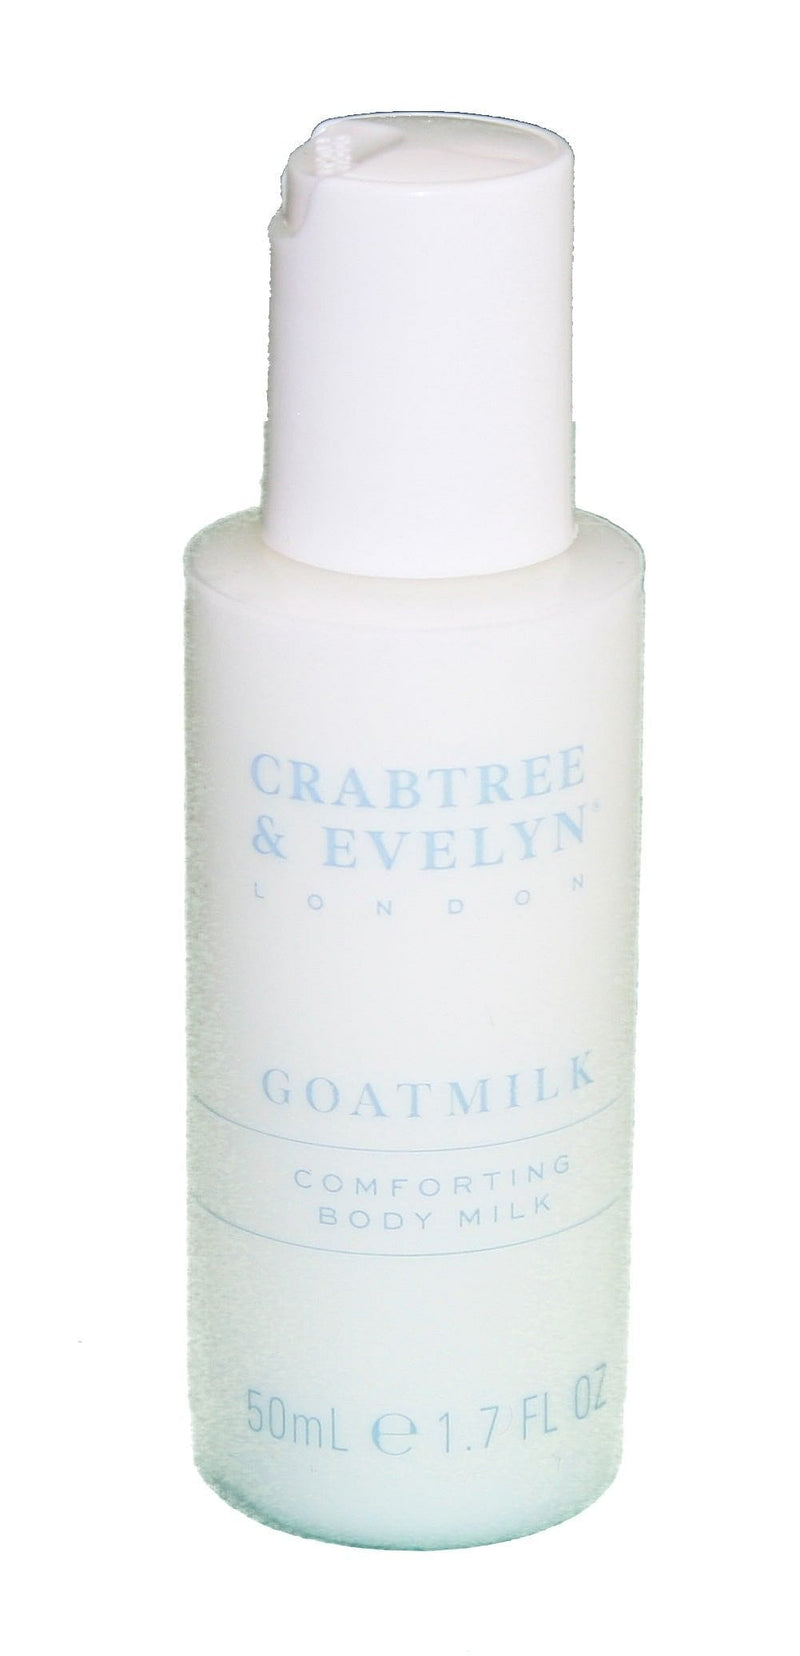 Crabtree & Evelyn Goatmilk Body Milk - 50ml - Shelburne Country Store